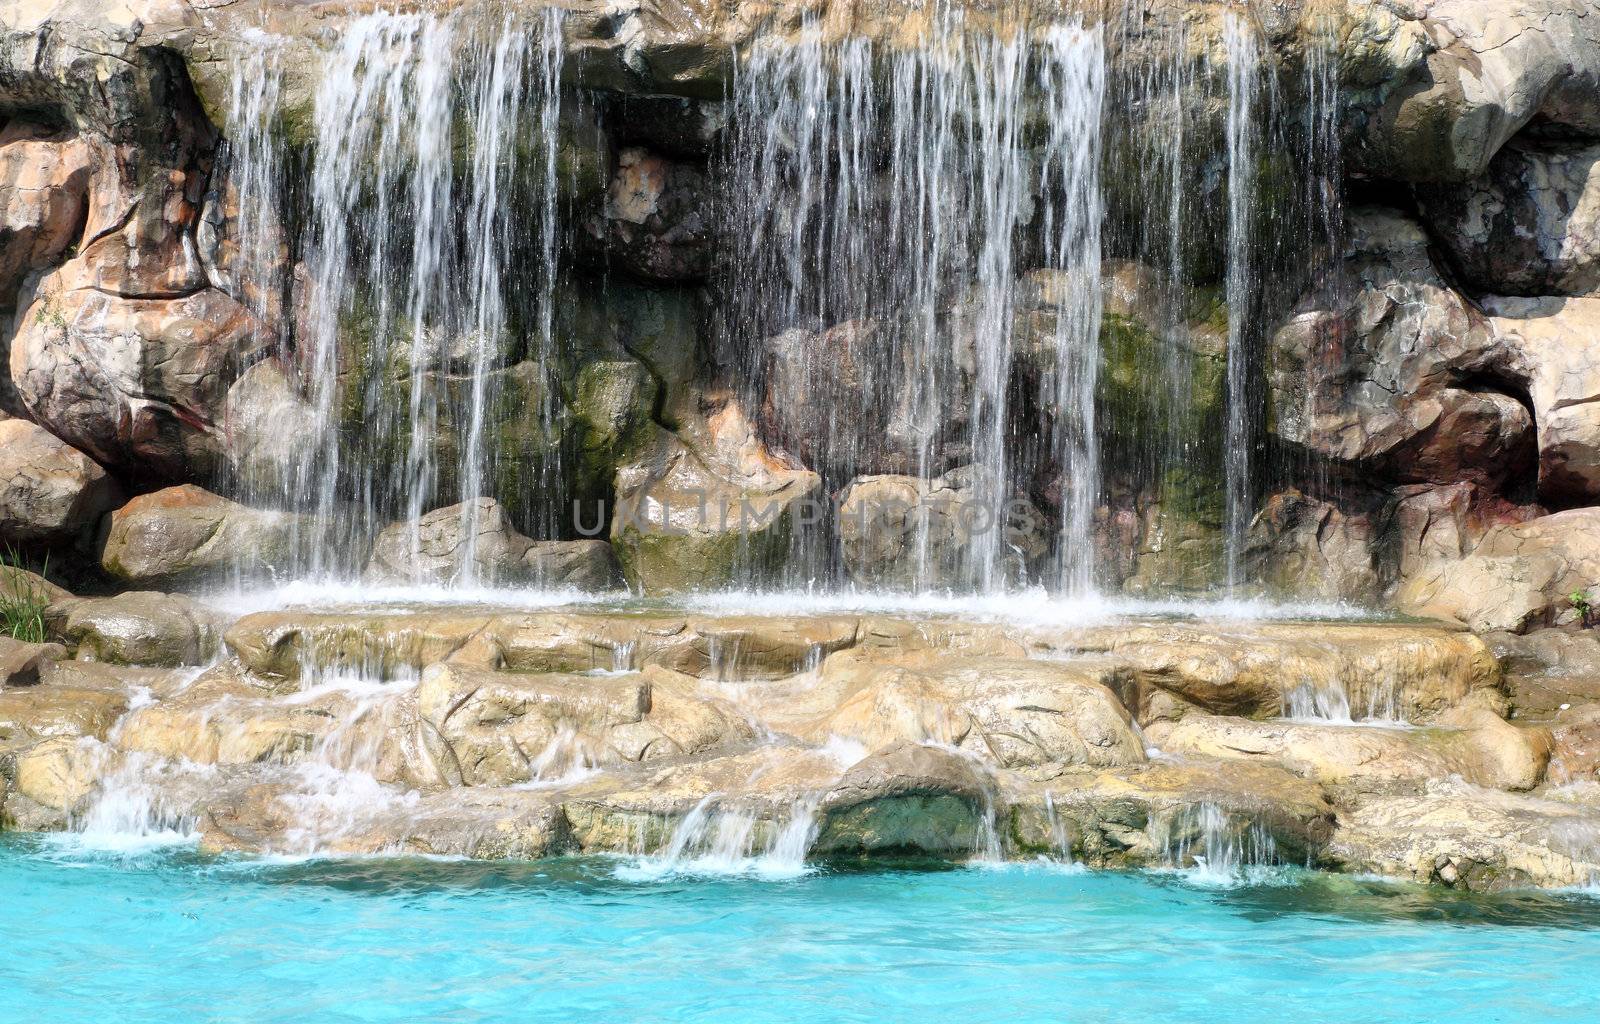 flowing waterfall in swimming pool by geargodz